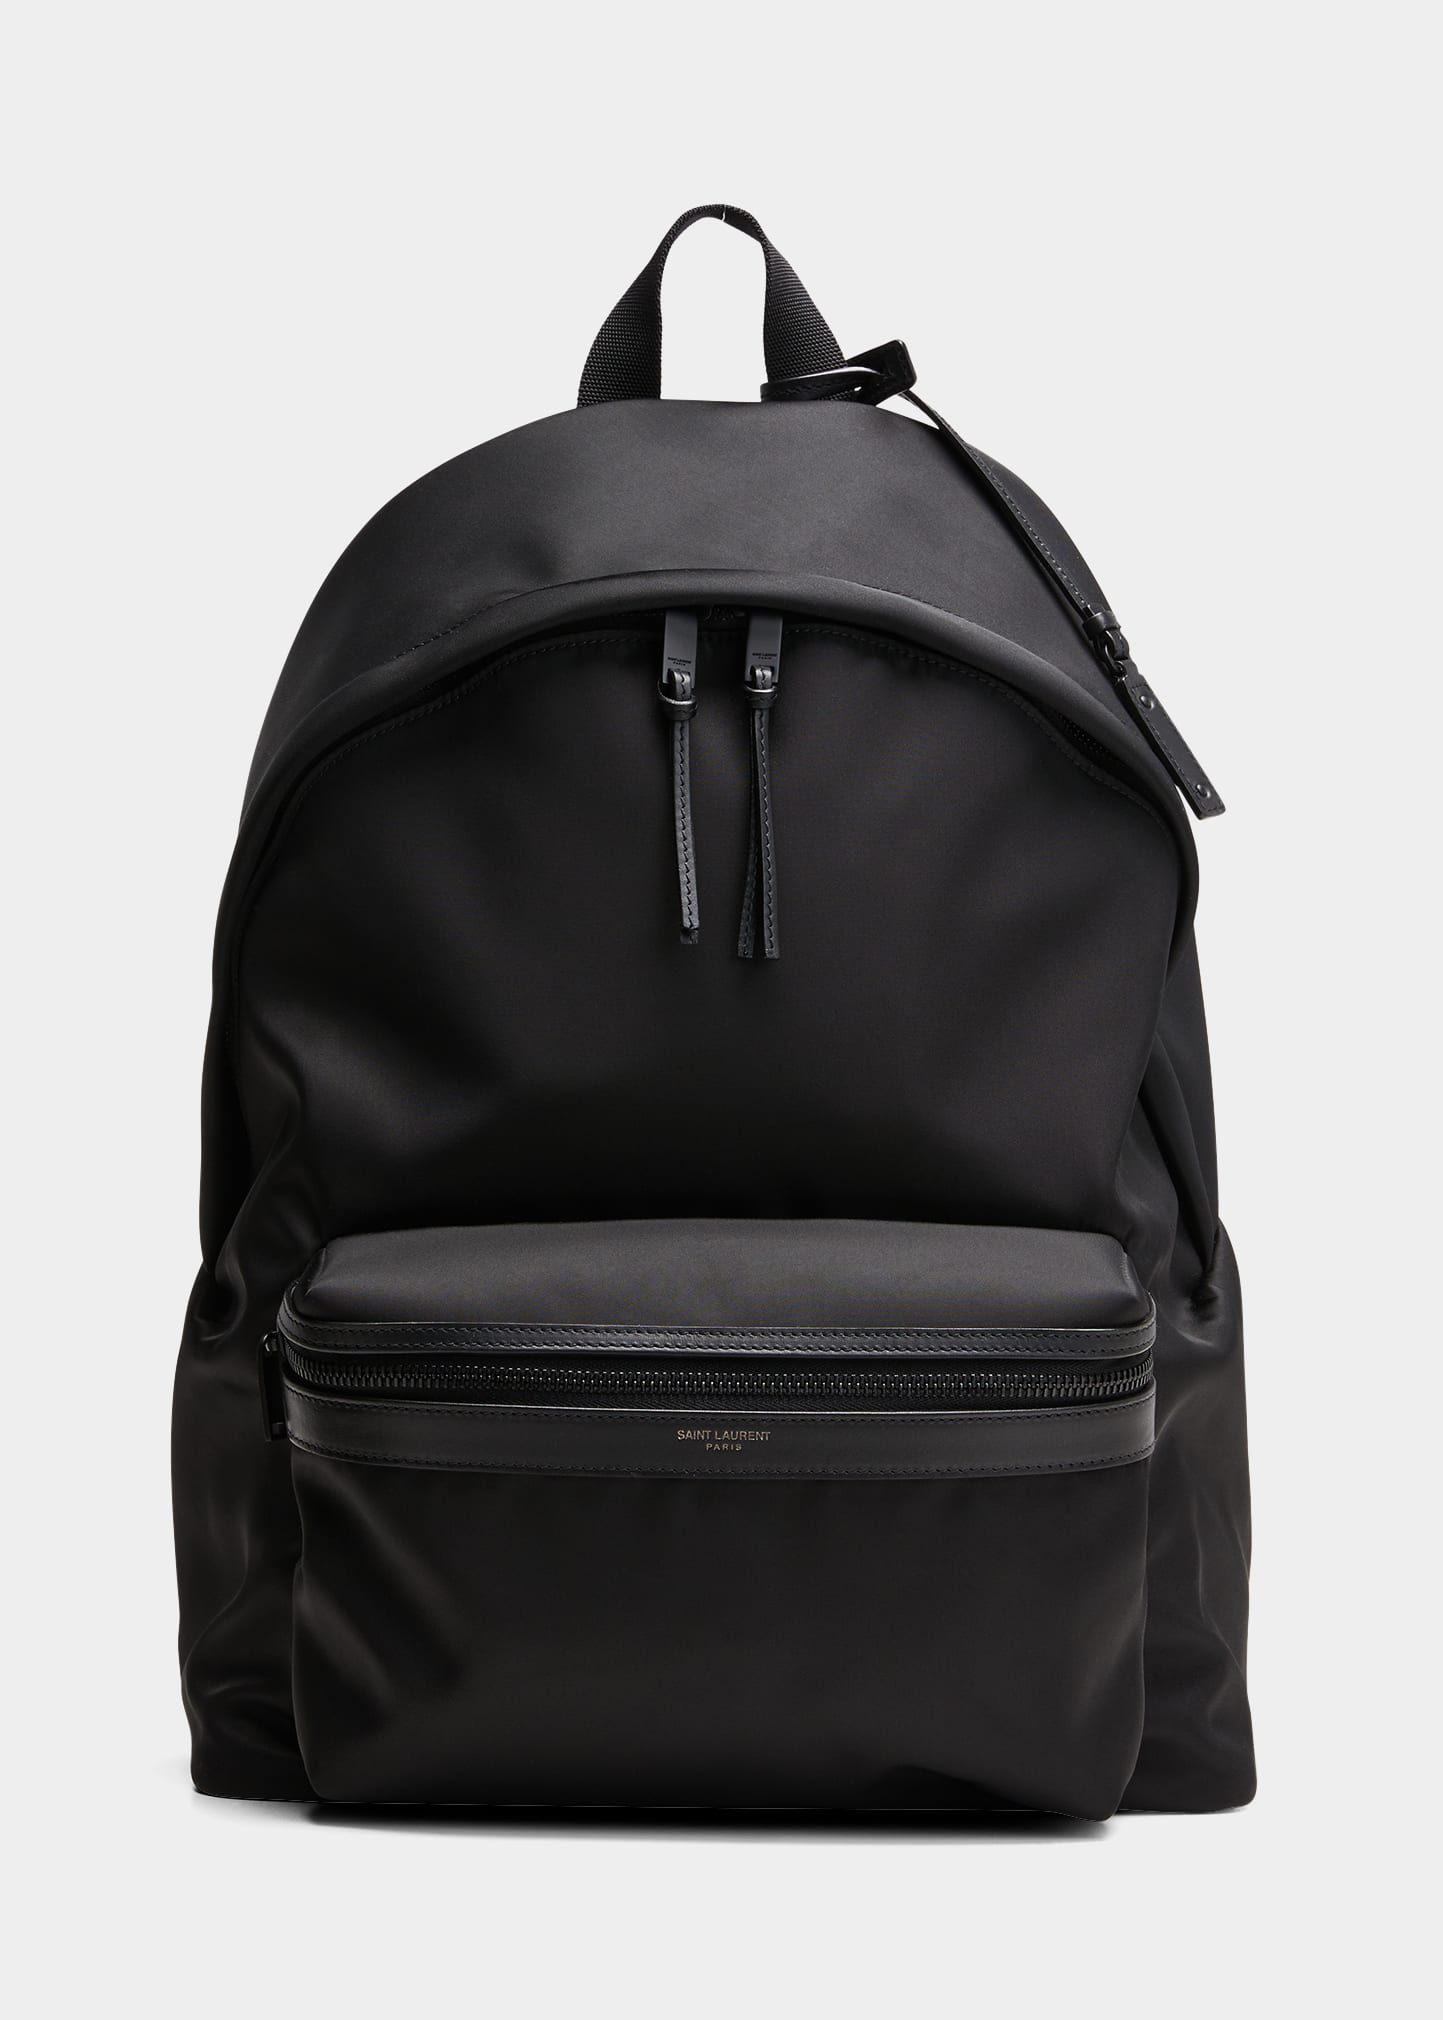 saint laurent backpack